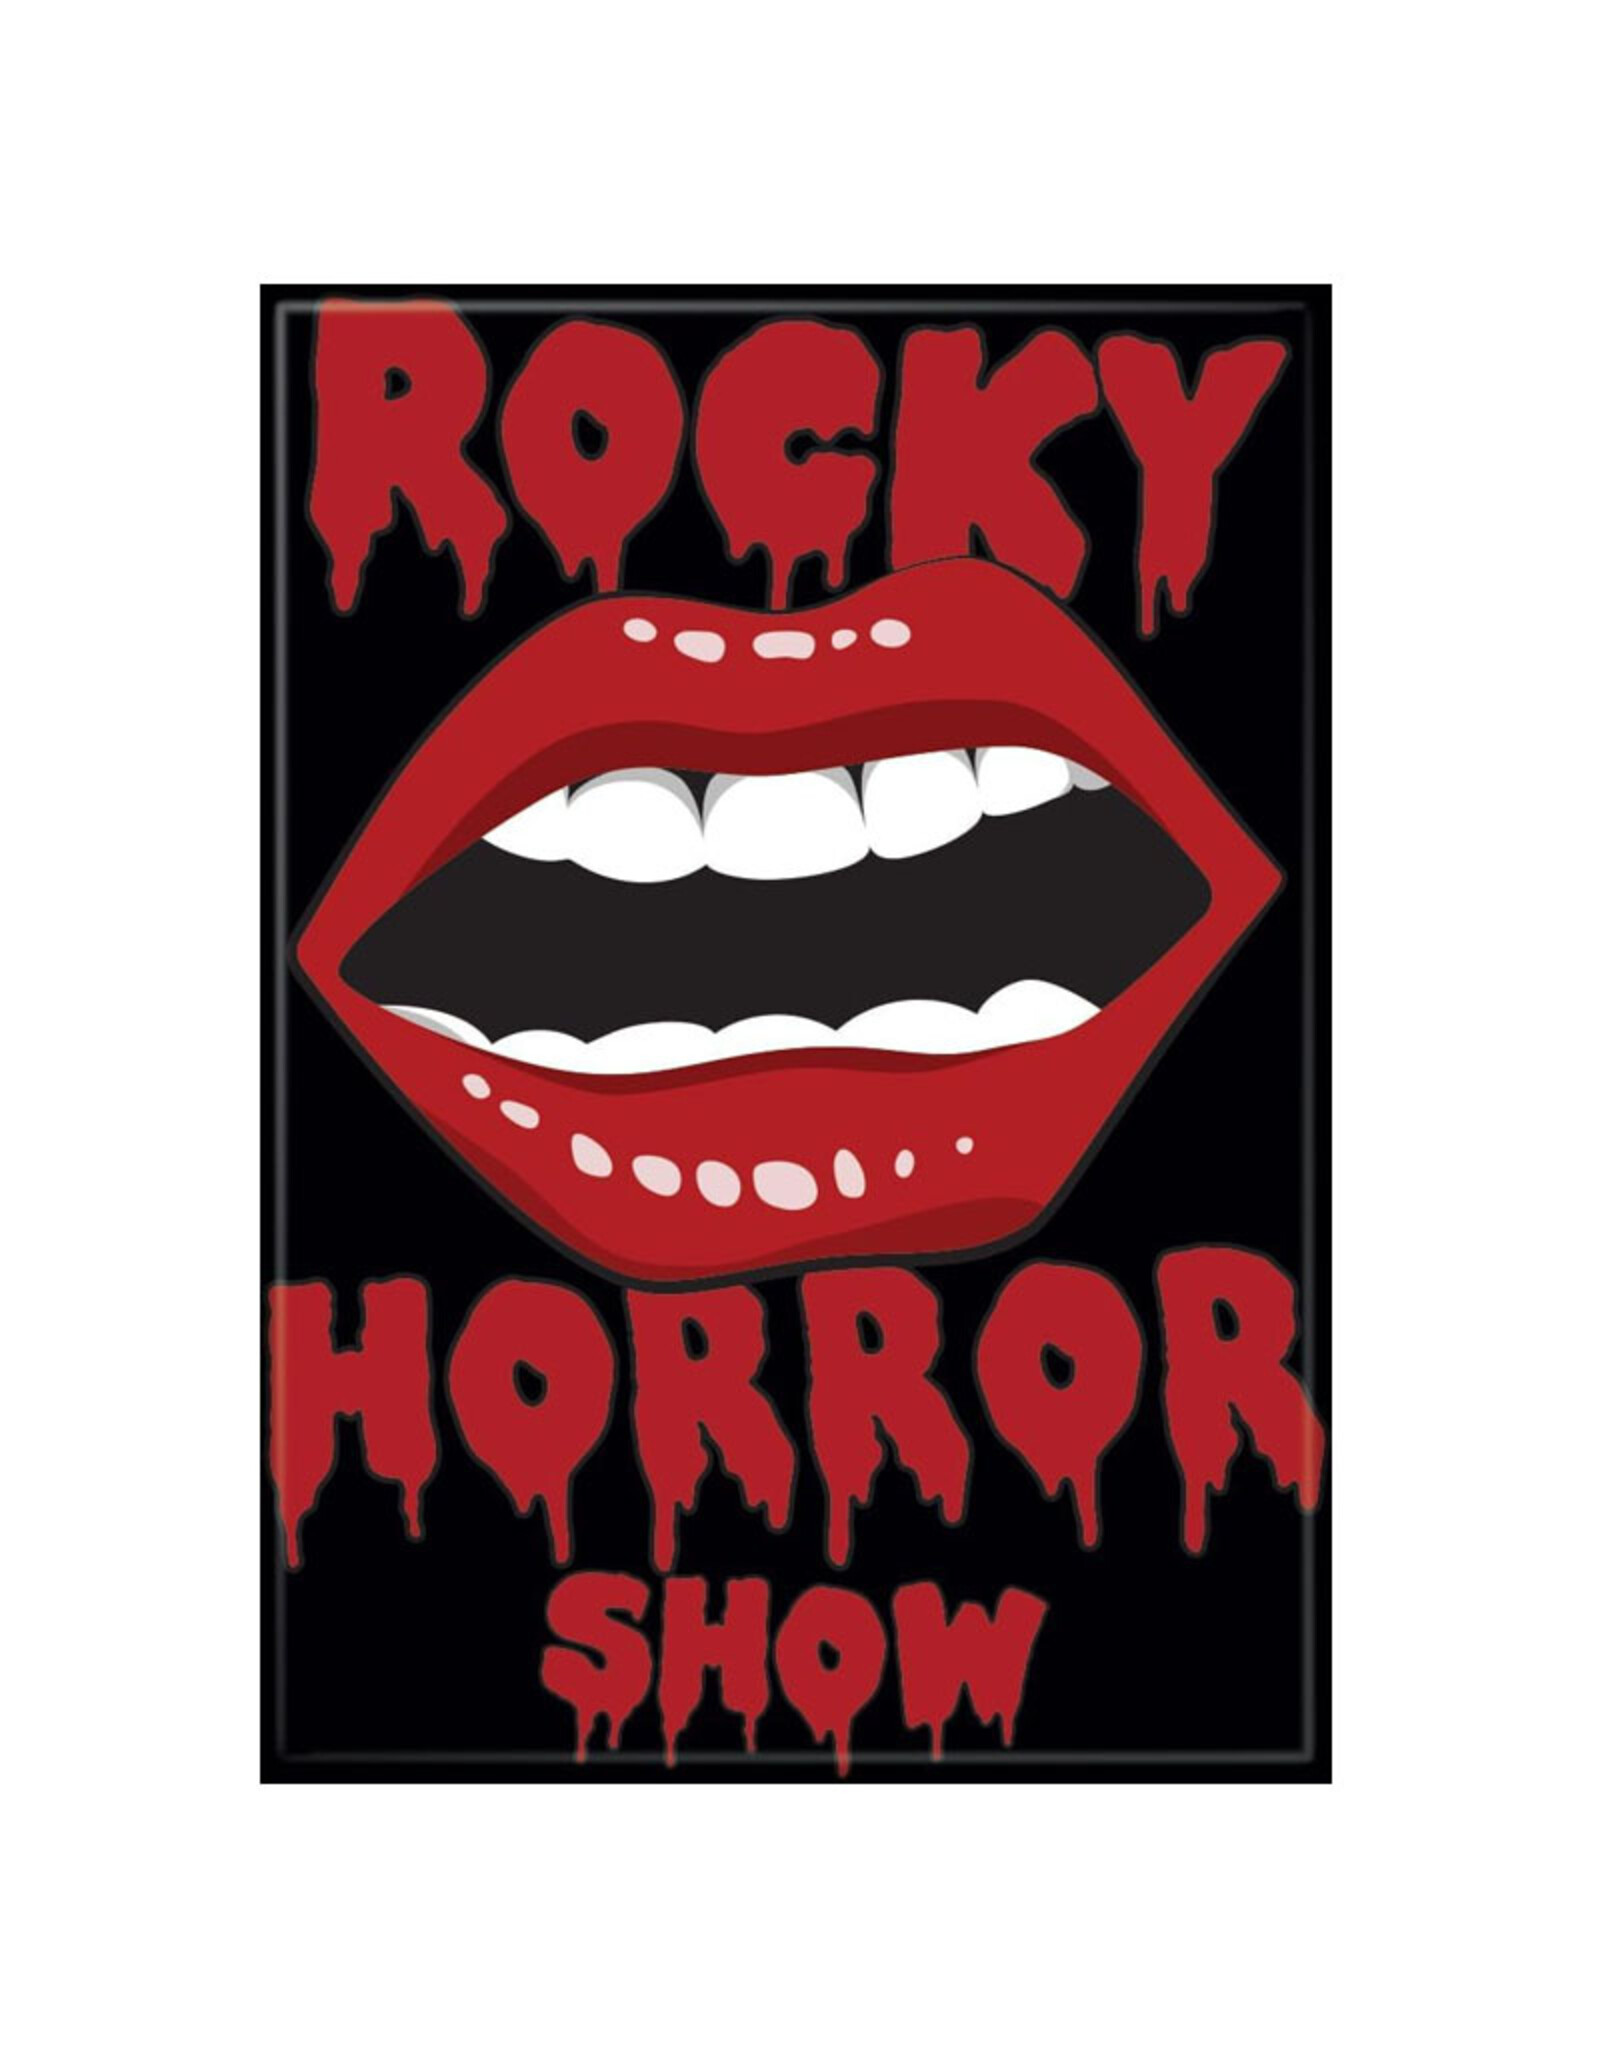 Ata-Boy Rocky Horror Show Lips Magnet